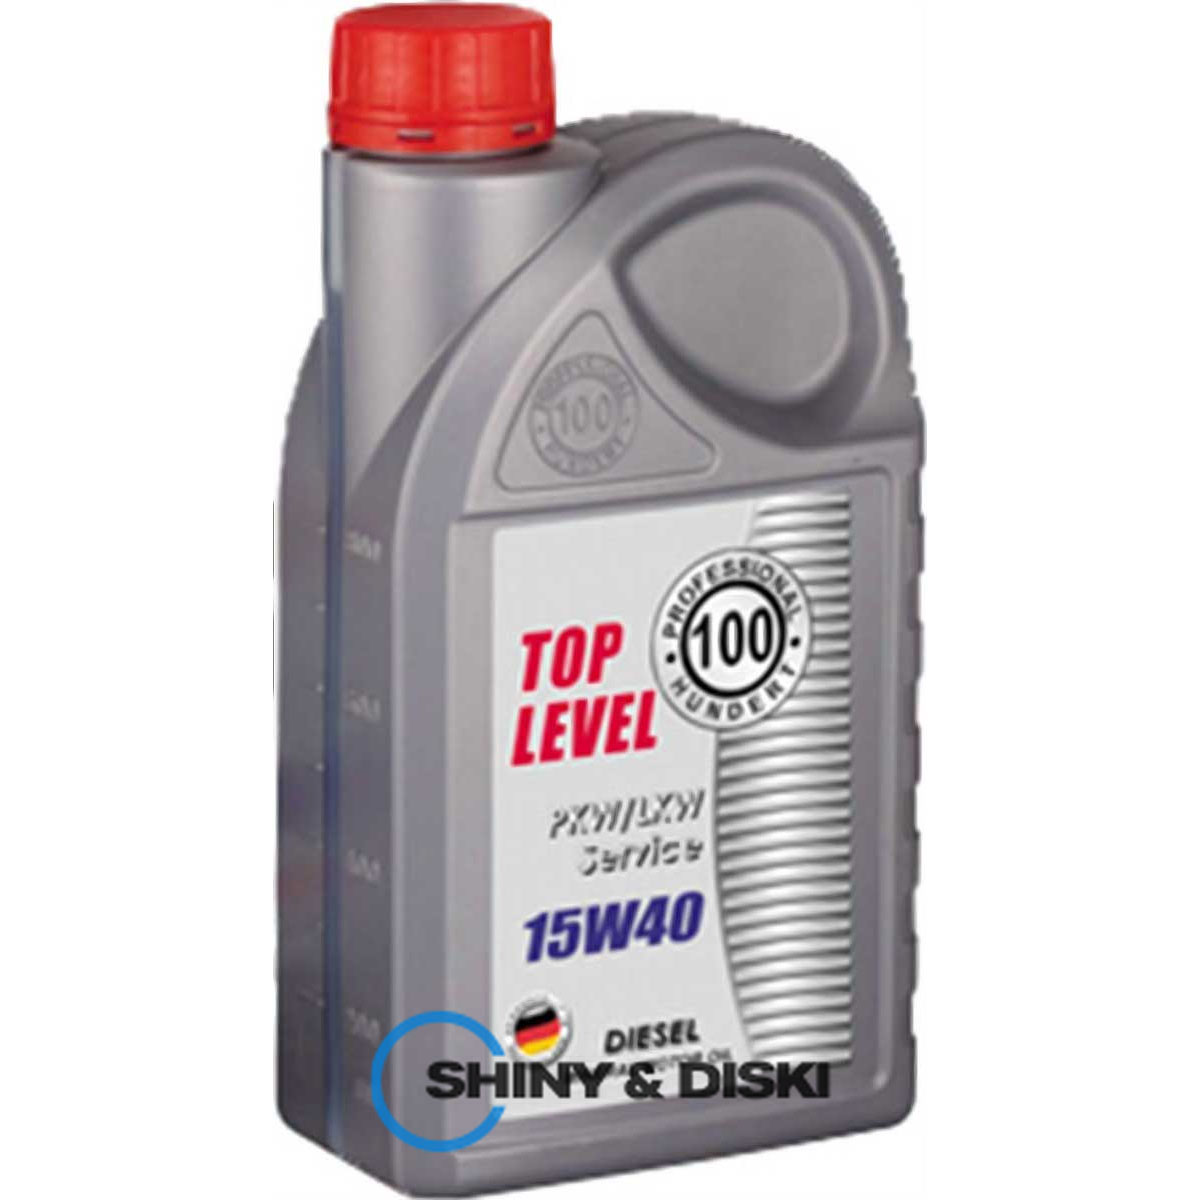 professional hundert top level diesel